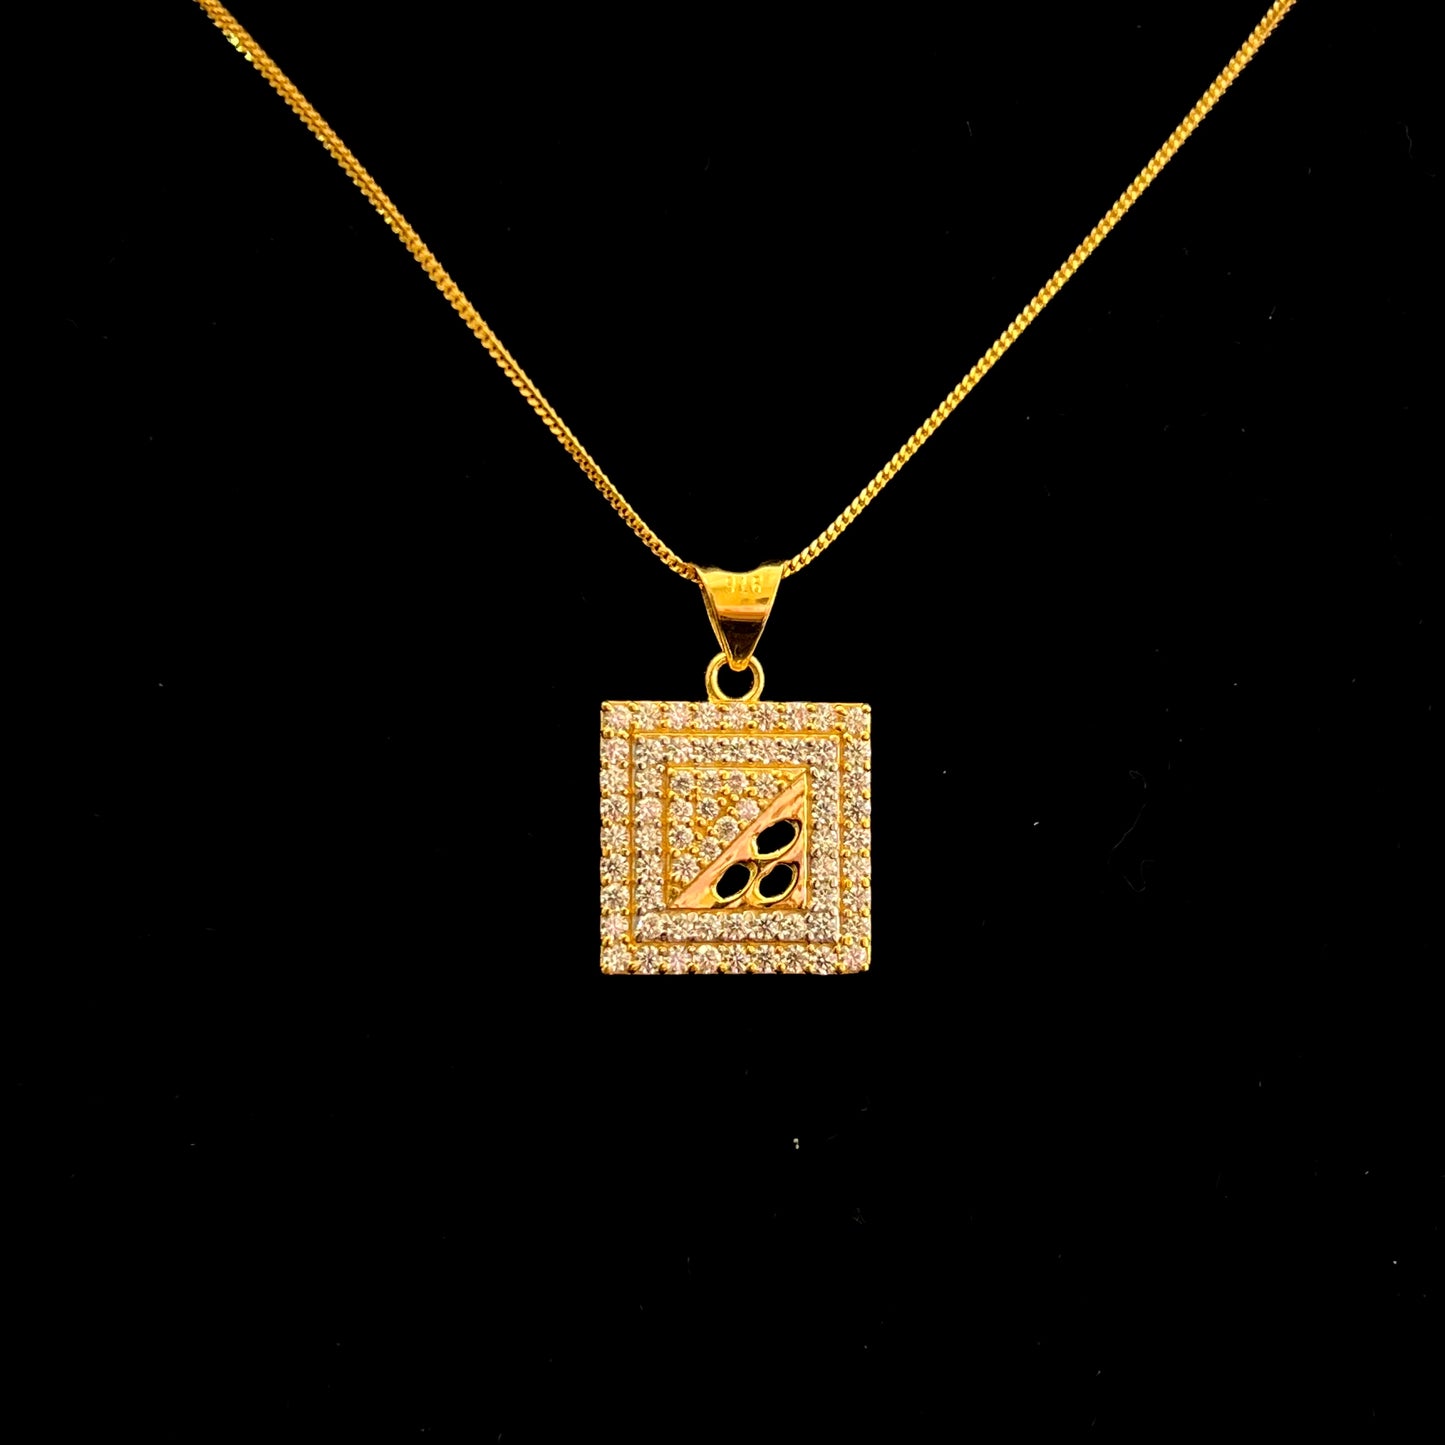 Square Gold Pendant with Glistening CZ Stones